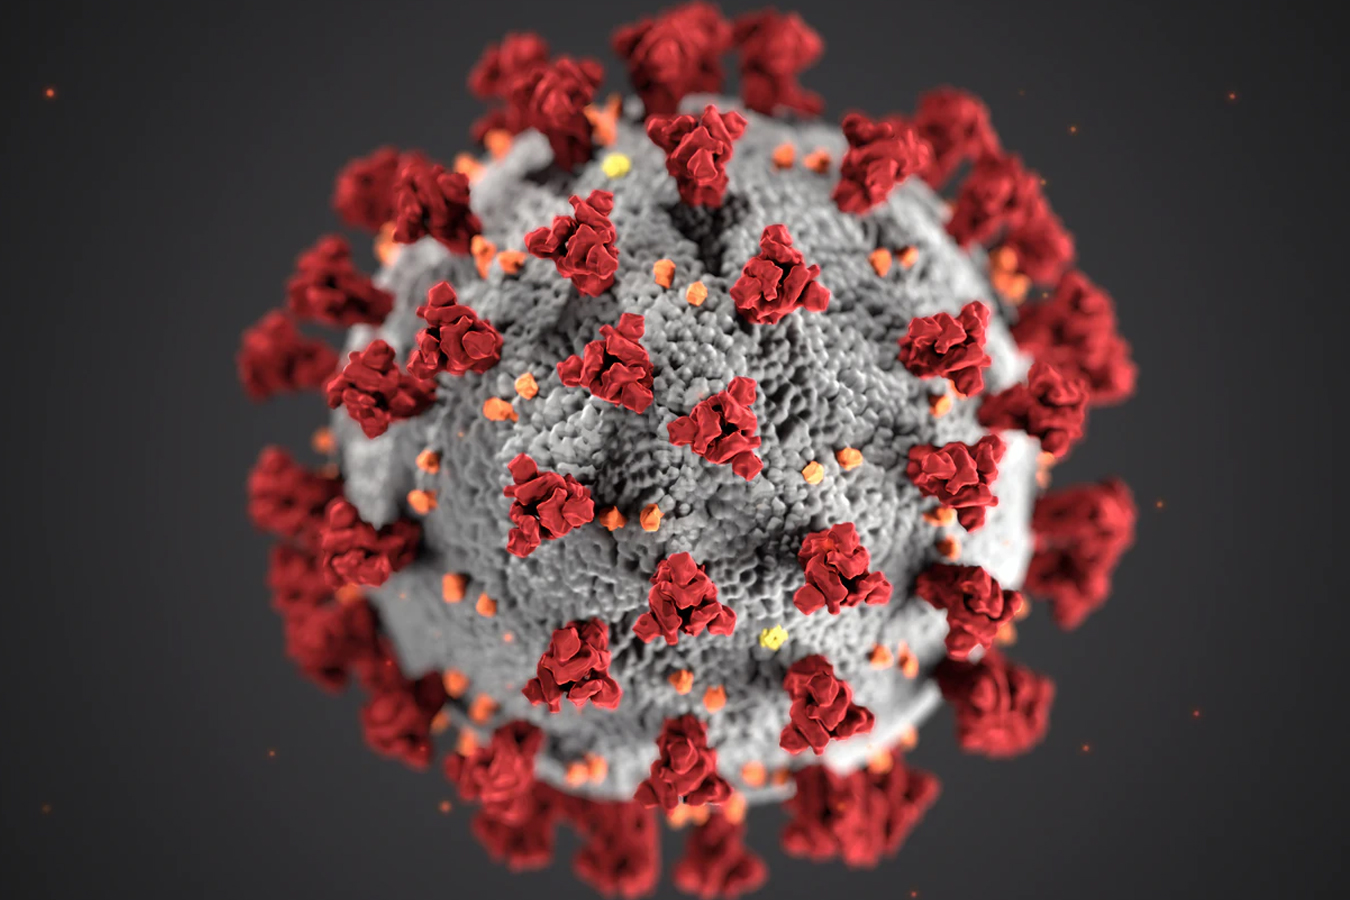 What is a novel coronavirus?